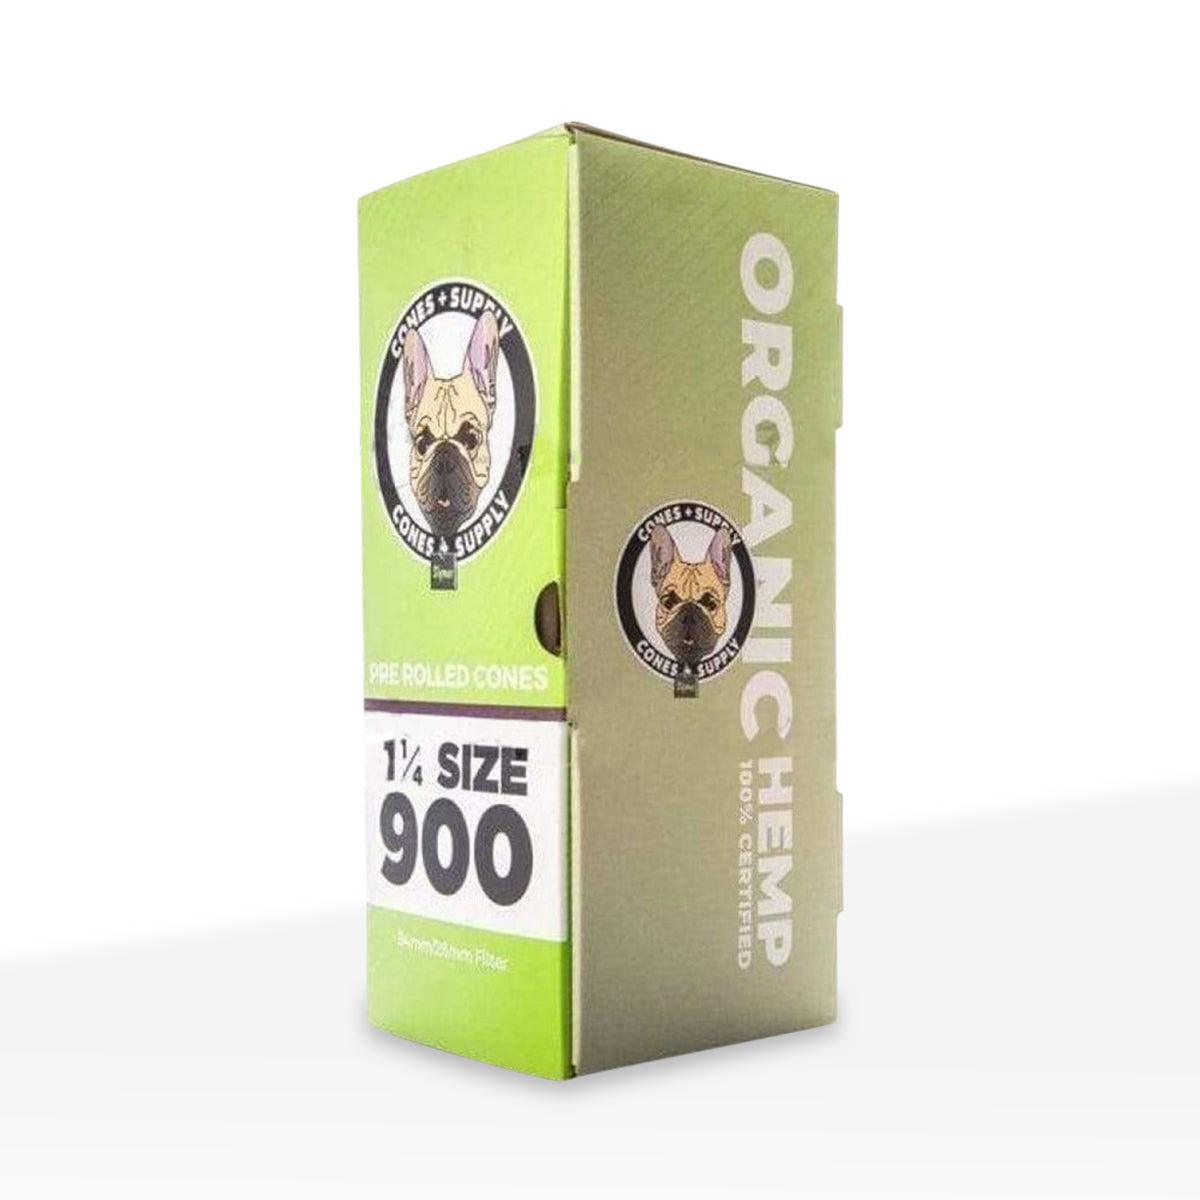 CONES + SUPPLY | Pre-Rolled Organic Hemp Cones 1¼ | 84mm - Hemp Paper - 900 Count